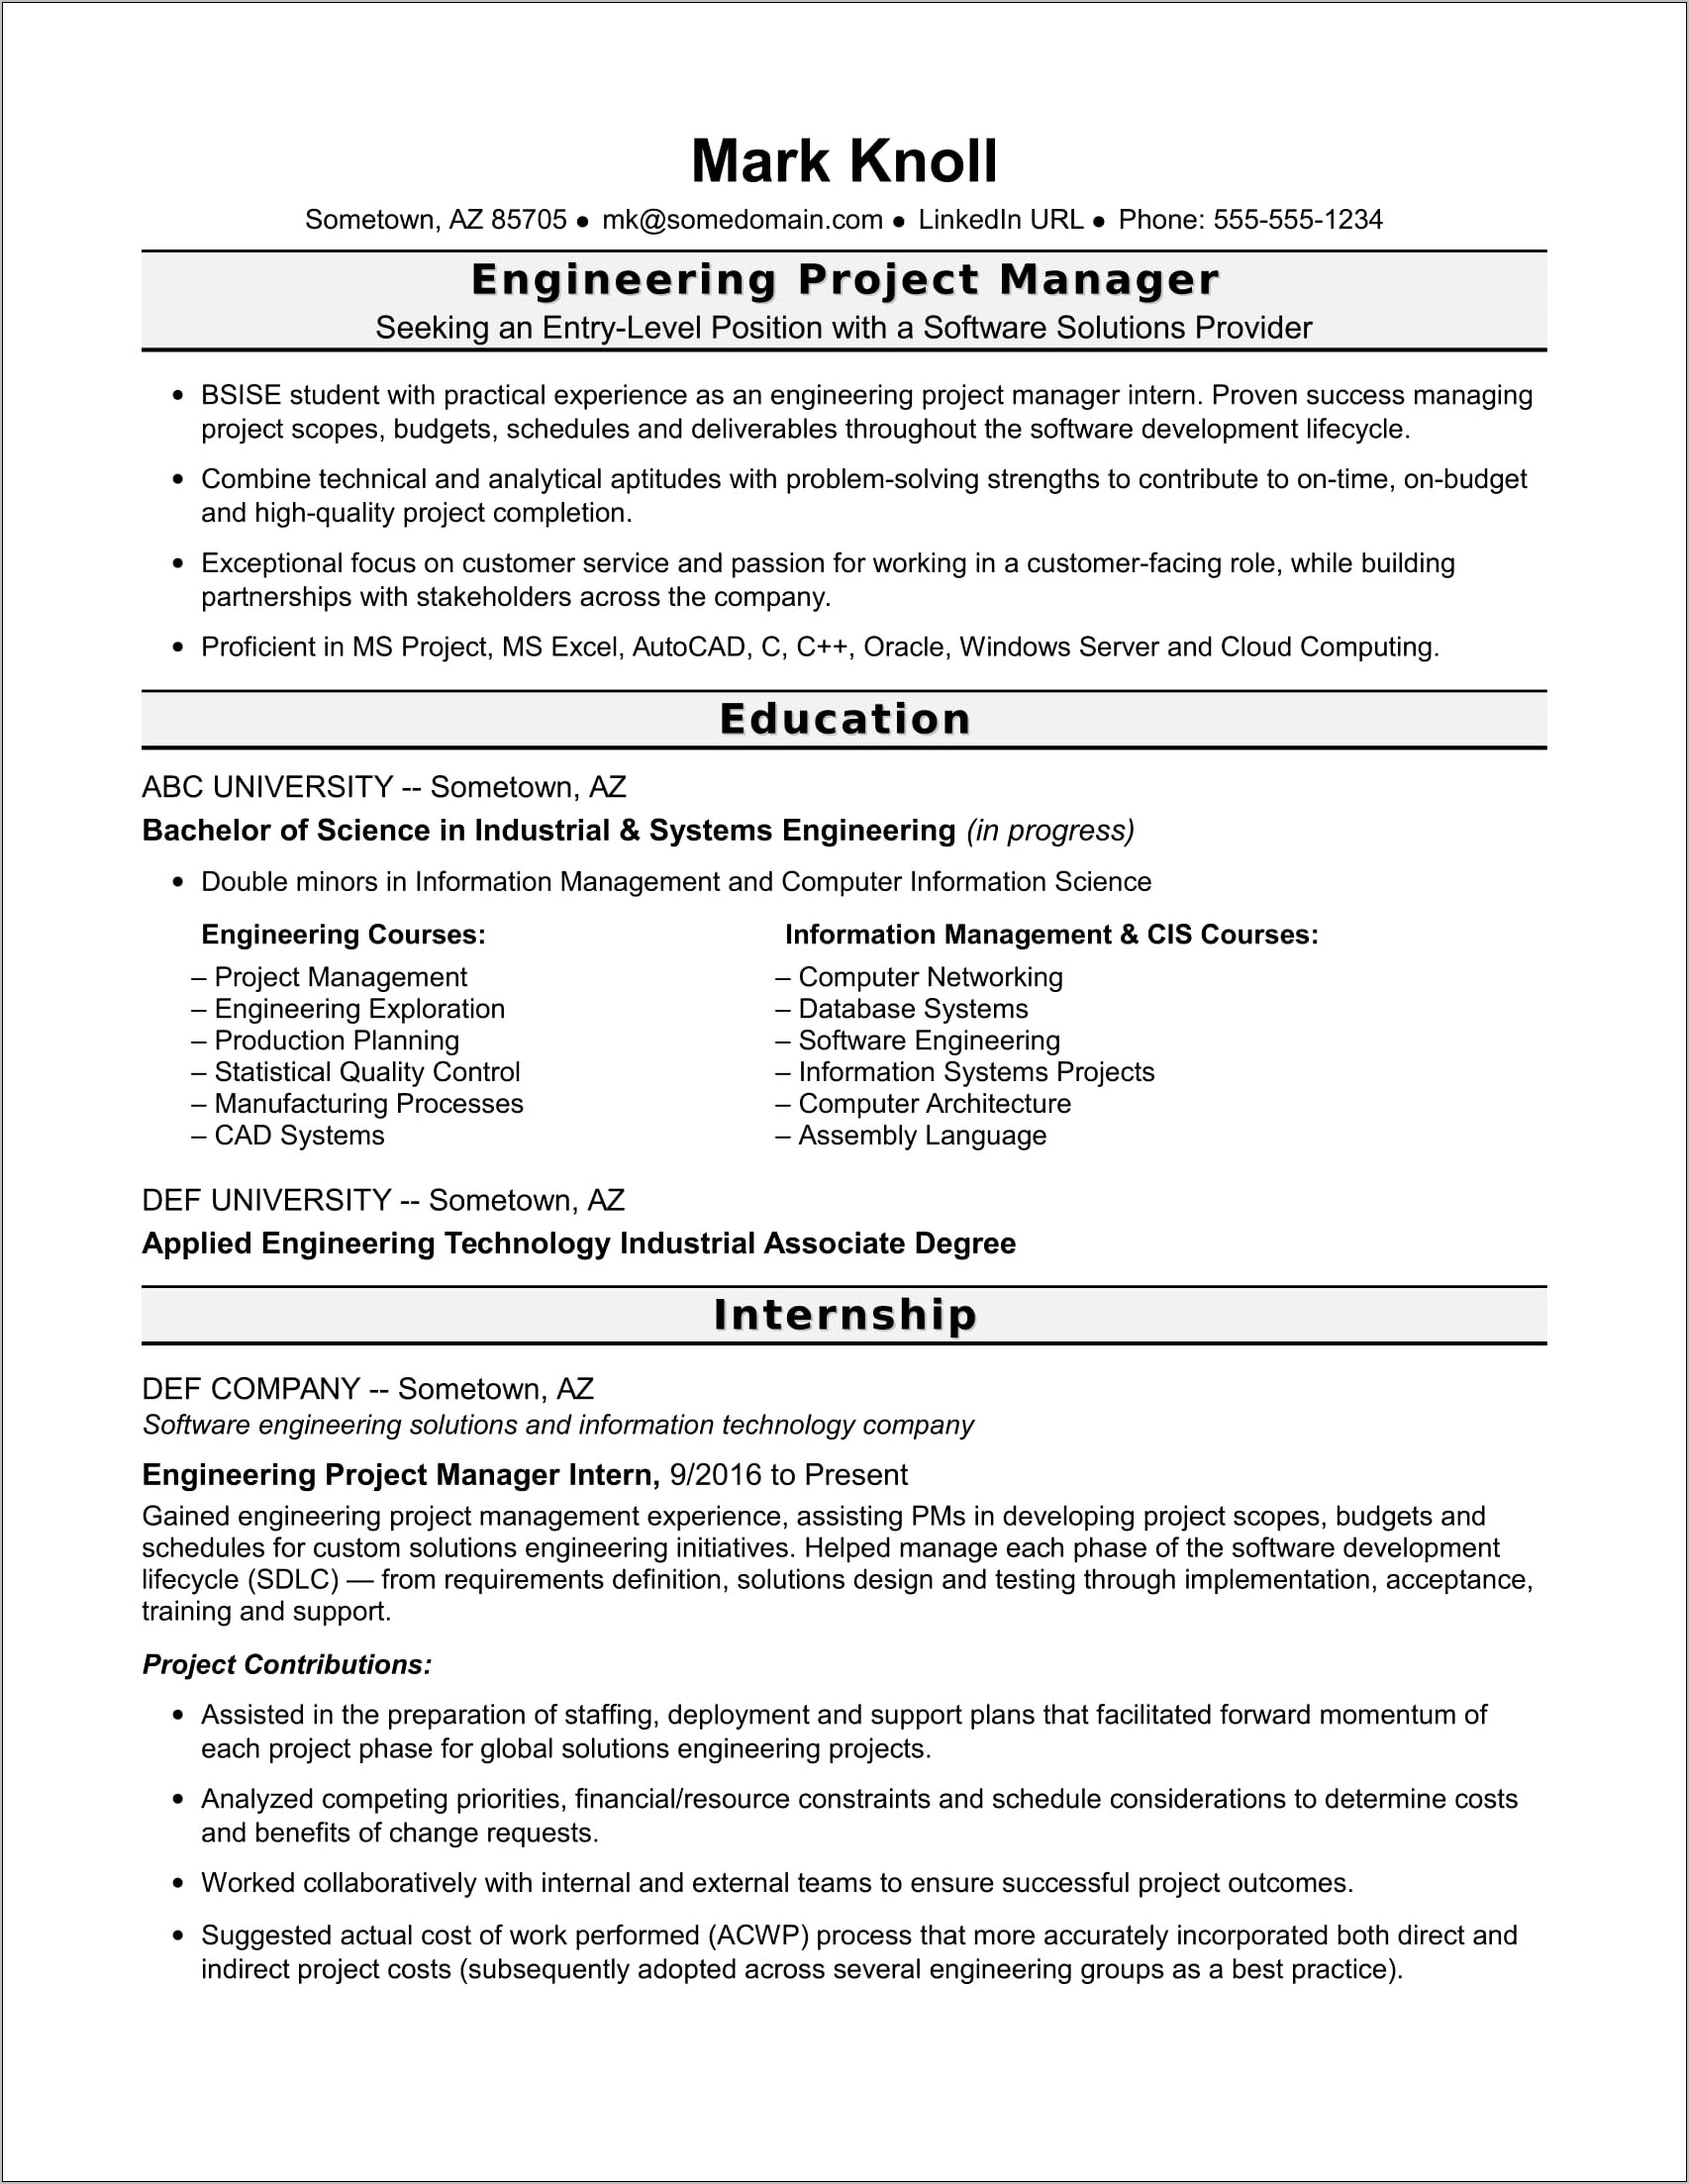 Resume Summary For Civil Engineer Fresher